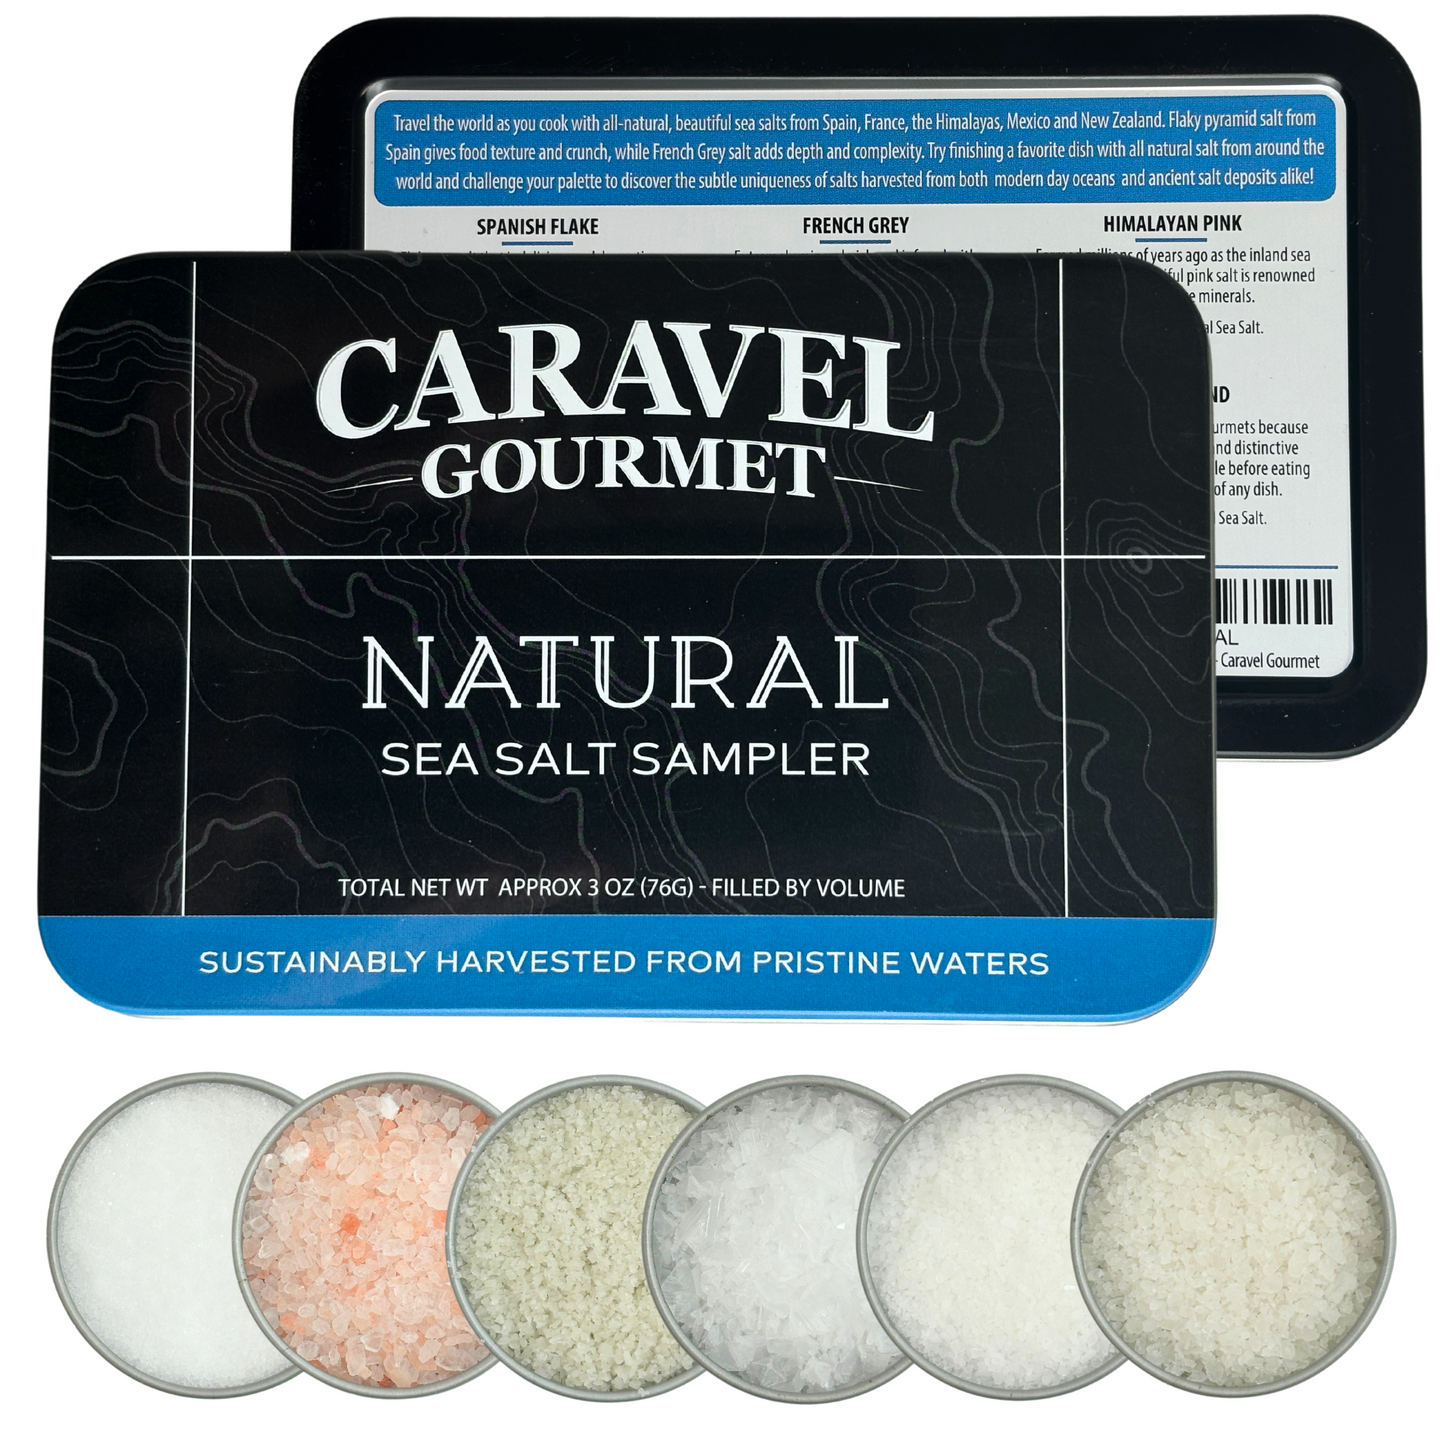 The Natural Sea Salt Sampler - Mini Gift Set for Foodies